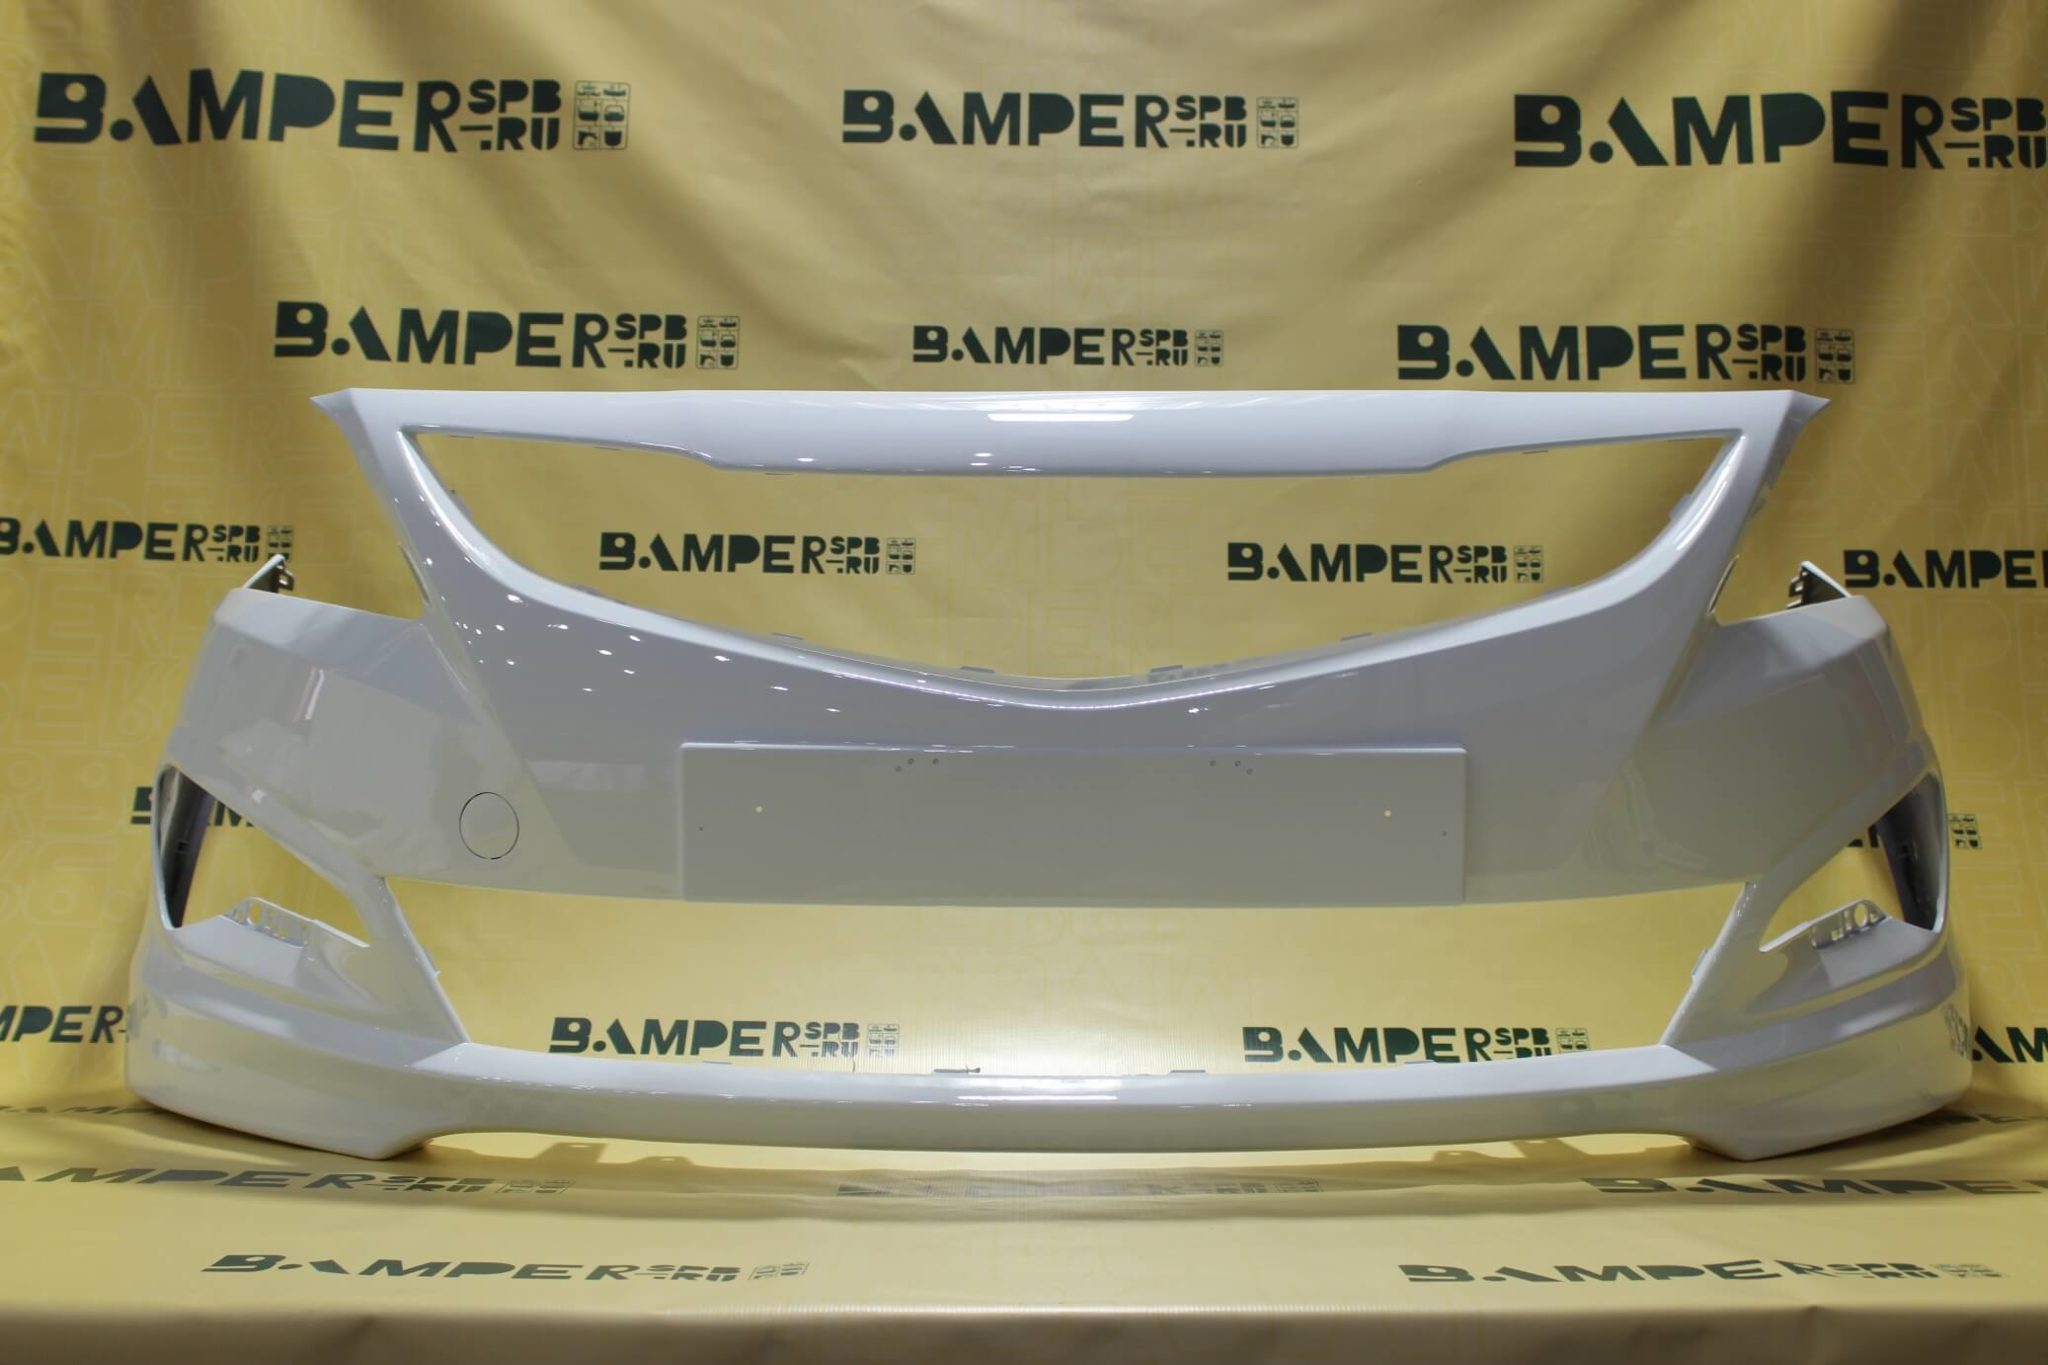 Бампер солярис 2015 год. Бампер передний Хундай avg 3153903 белый. 8190452 Metaco бампер передний. Бампер Солярис передний. Бампер задний цвет SAE Solaris 2015г.